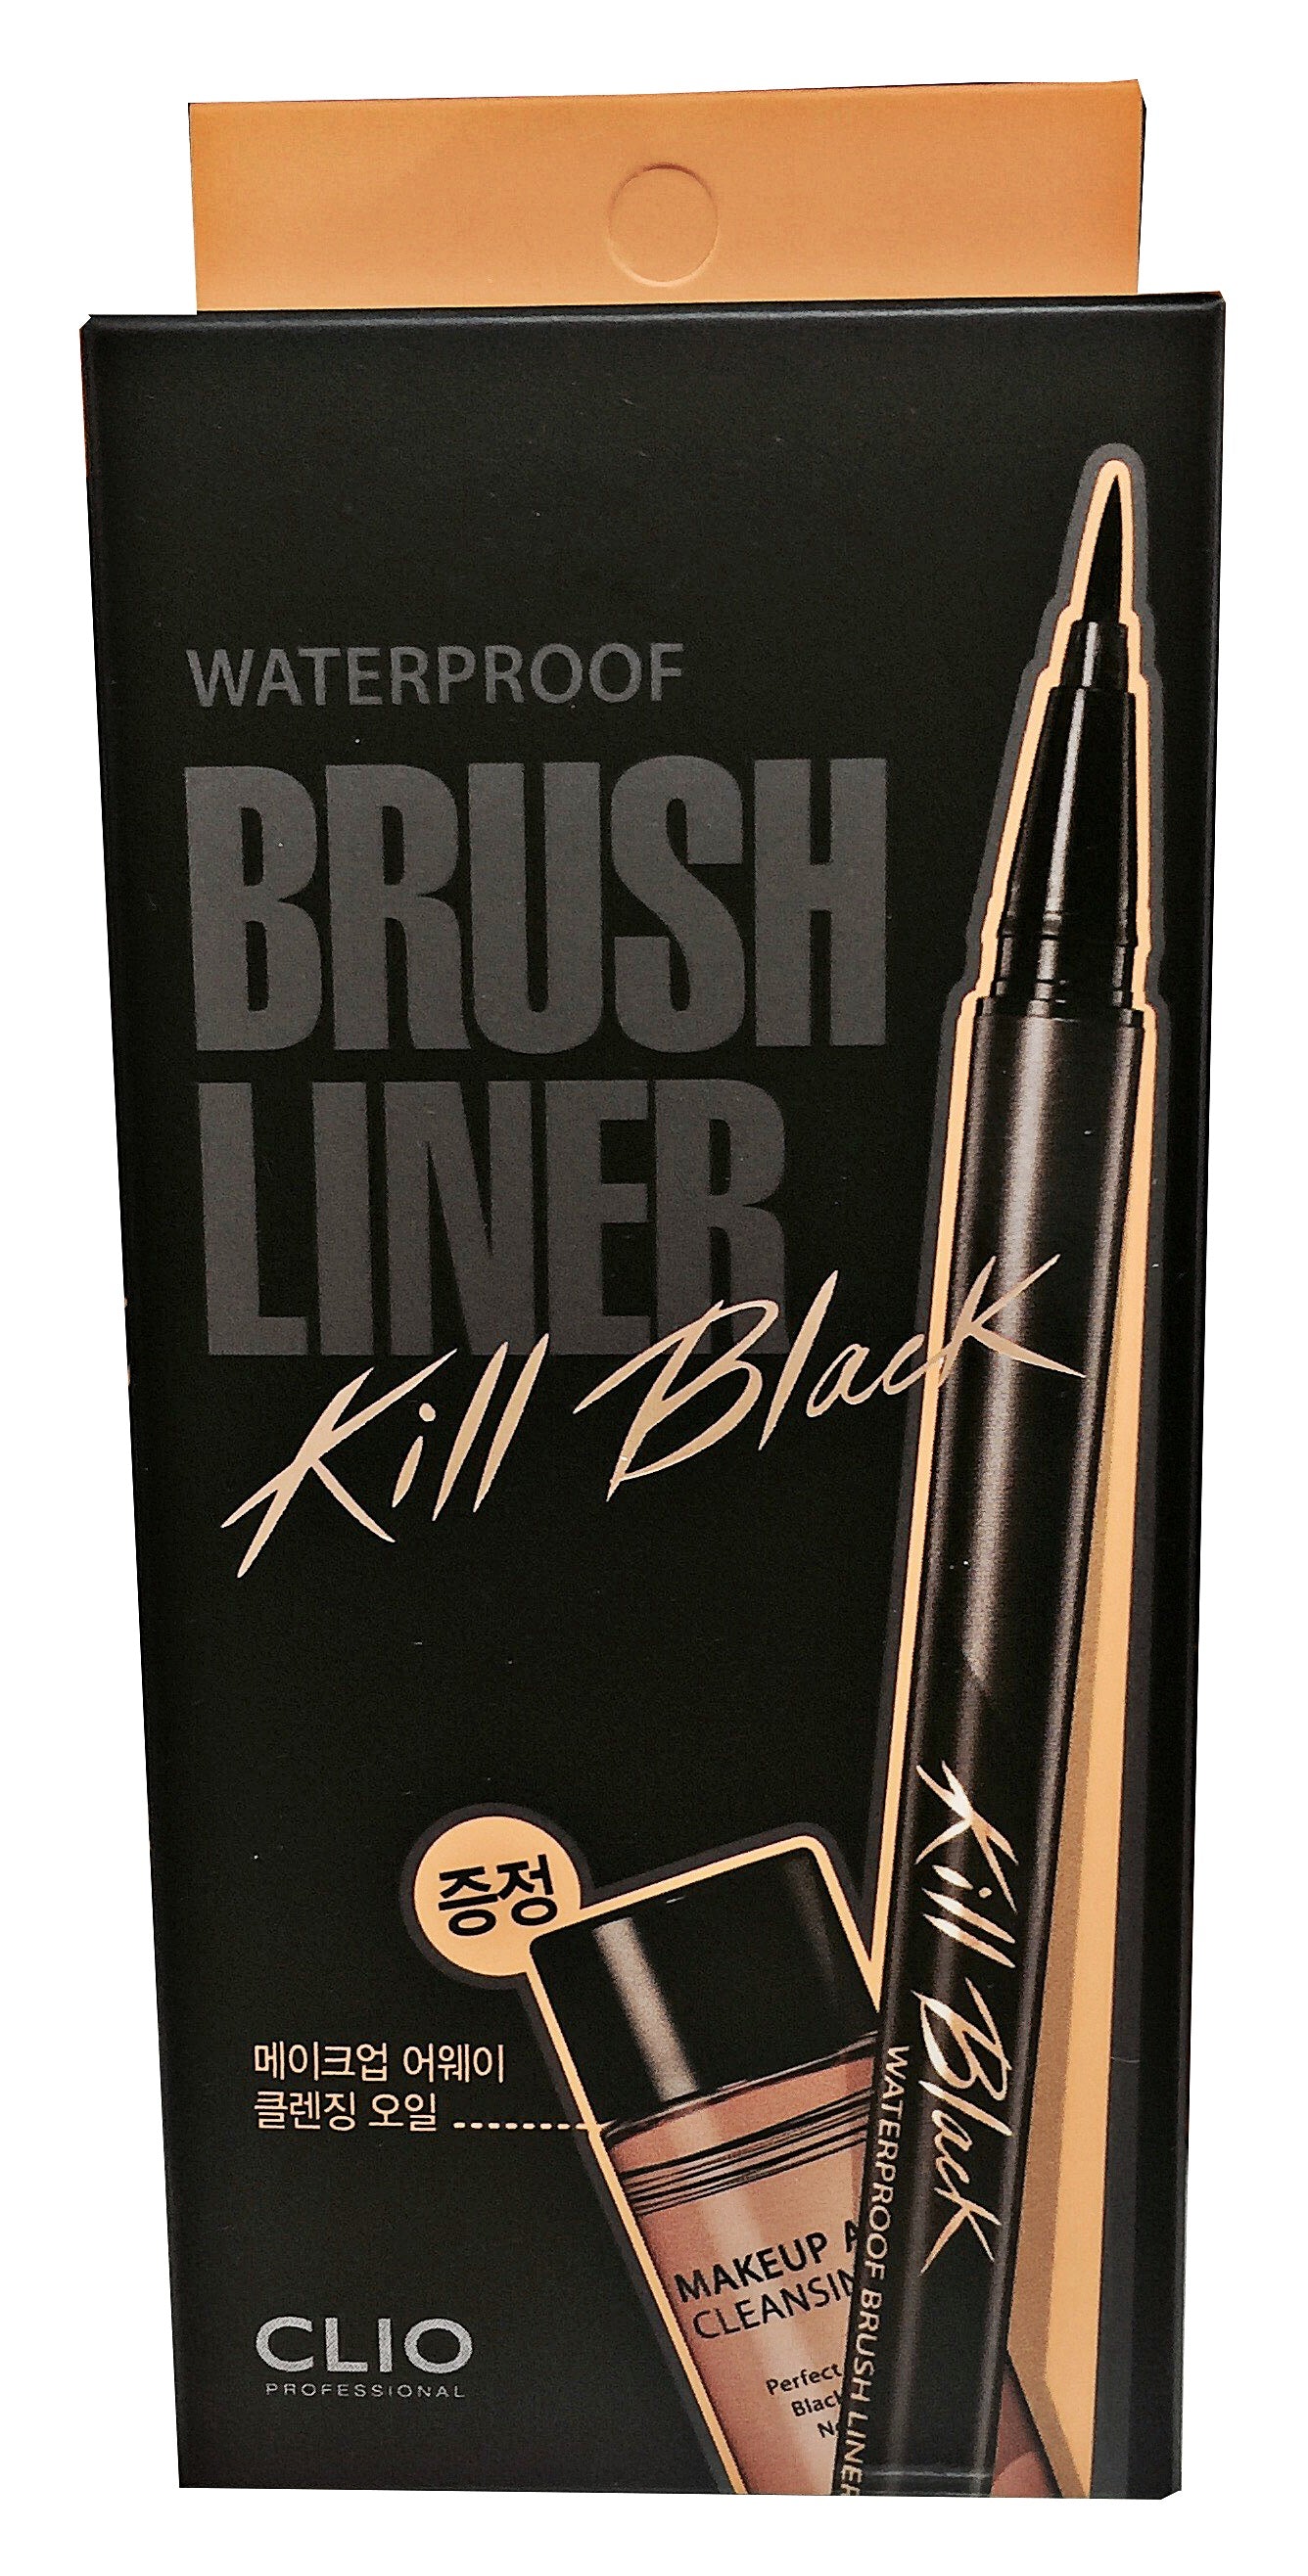 Clio Waterproof Brush Liner Makeup Away Cleansing Oil Sets Kits - Kill Black